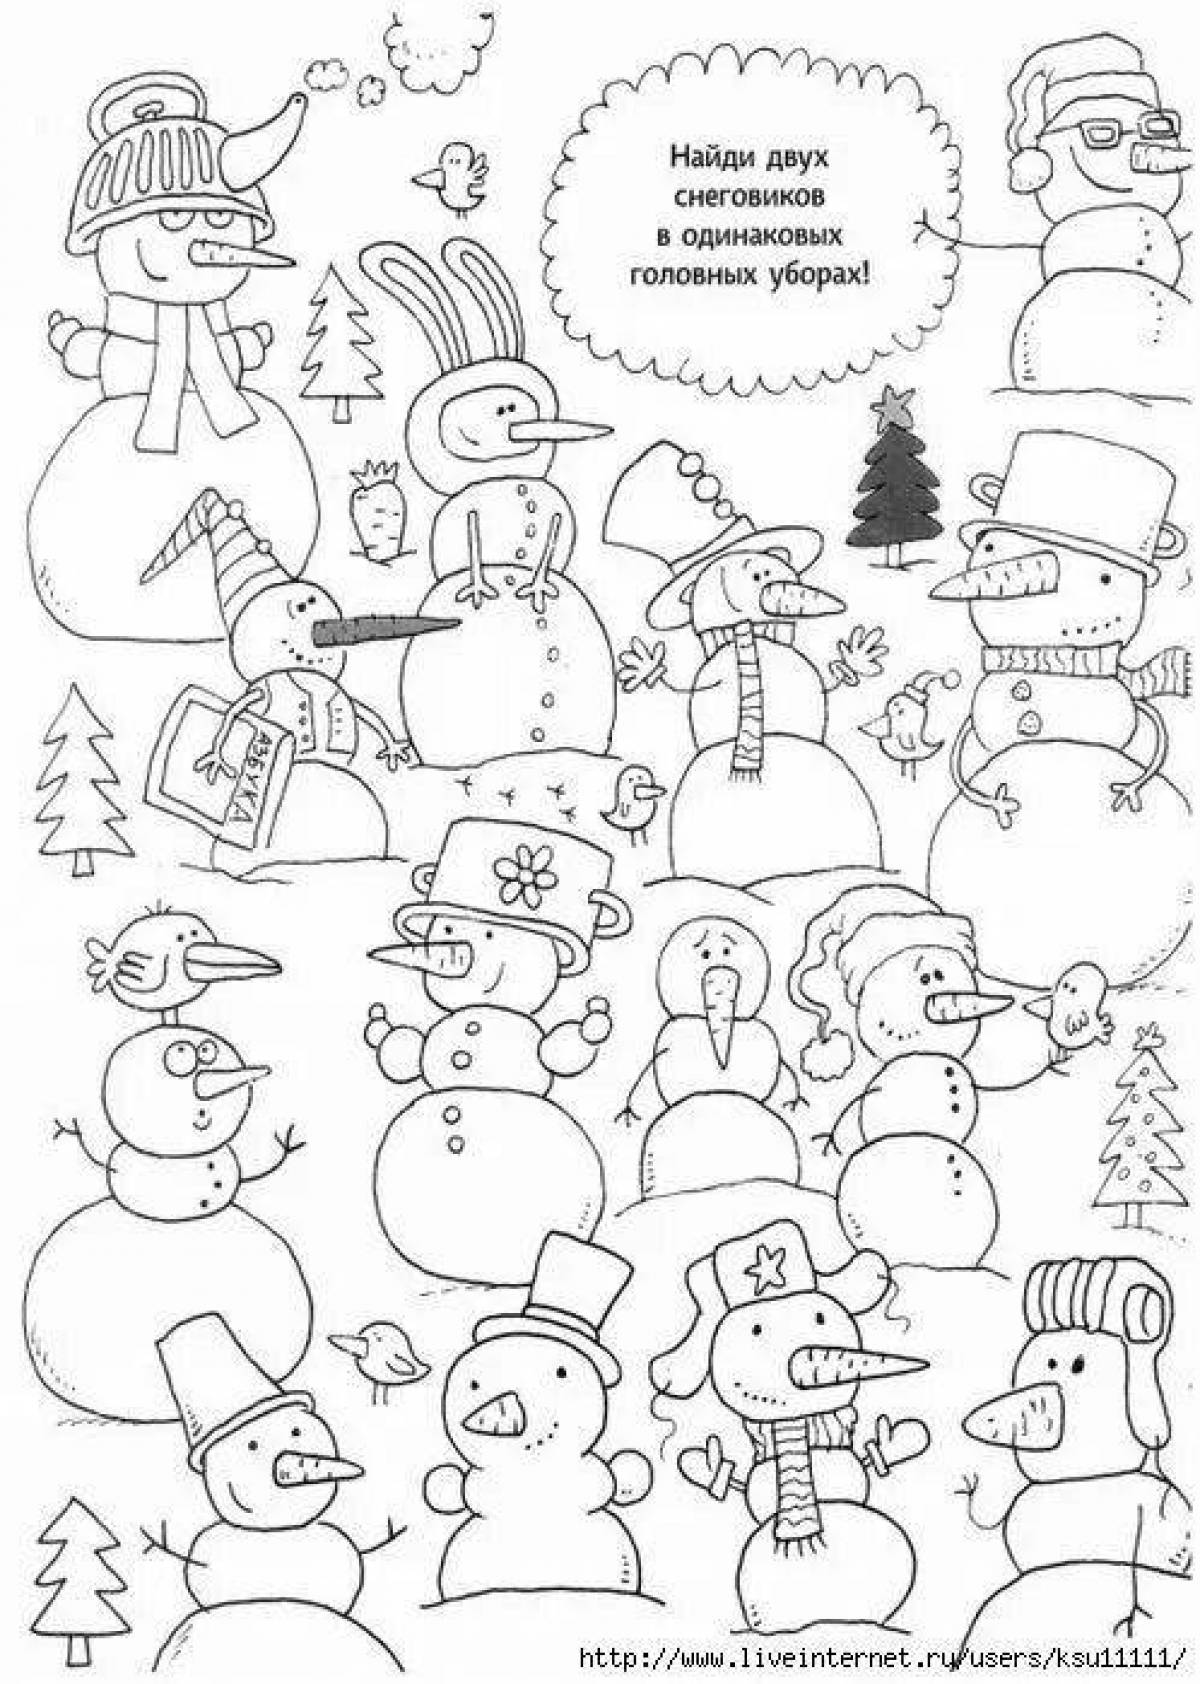 Rampant Christmas games coloring page